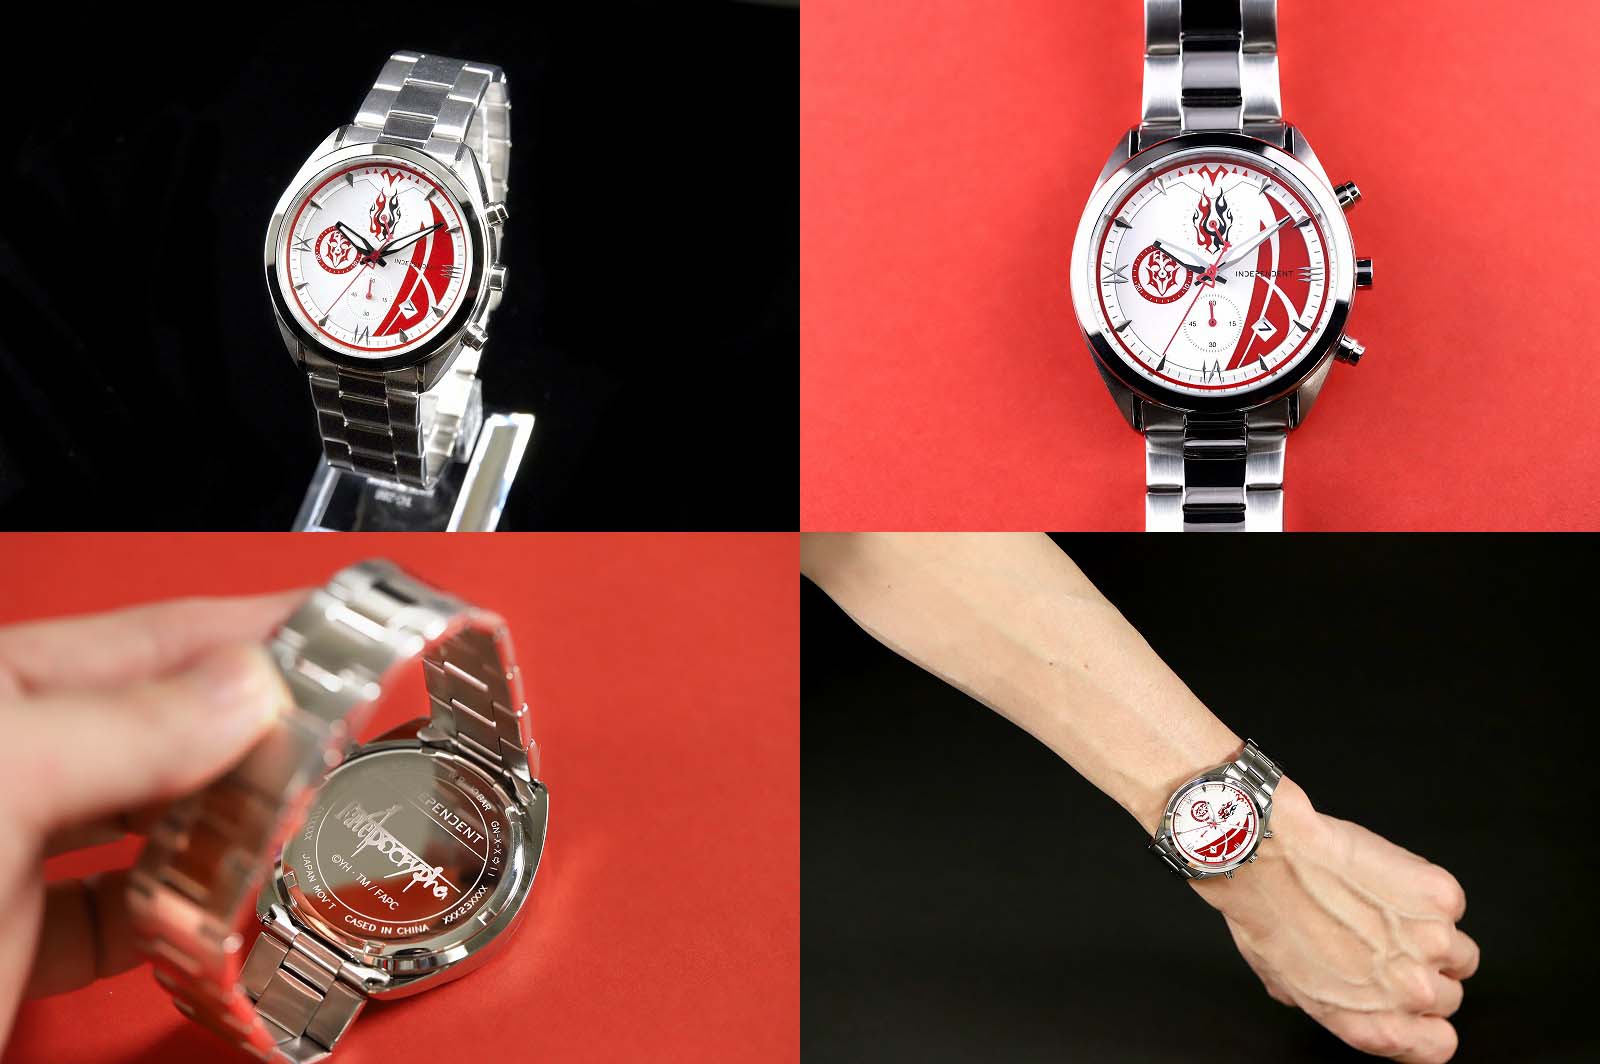 TVアニメ『Fate/Apocrypha』と「INDEPENDENT」のコラボが実現！ルーラーと赤のセイバーをイメージした腕時計が完全受注生産限定で発売